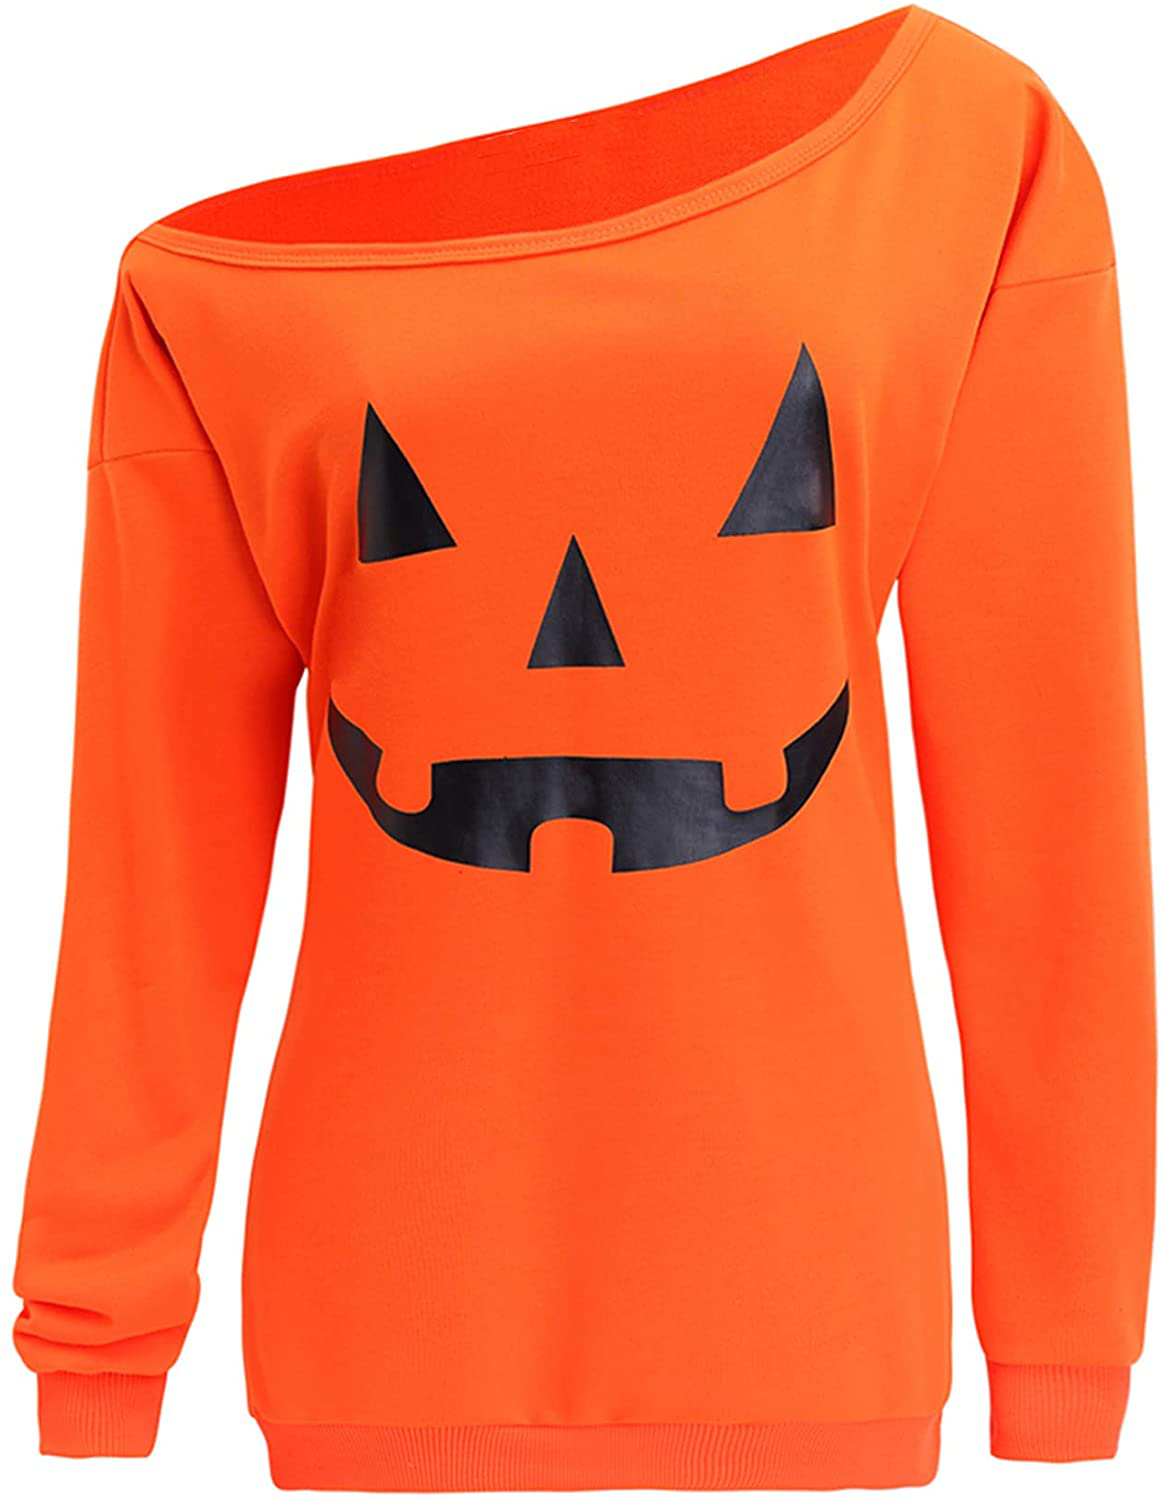 lymanchi Women Slouchy Shirts Halloween Pumpkin Long Sleeve Sweatshirts Pullover